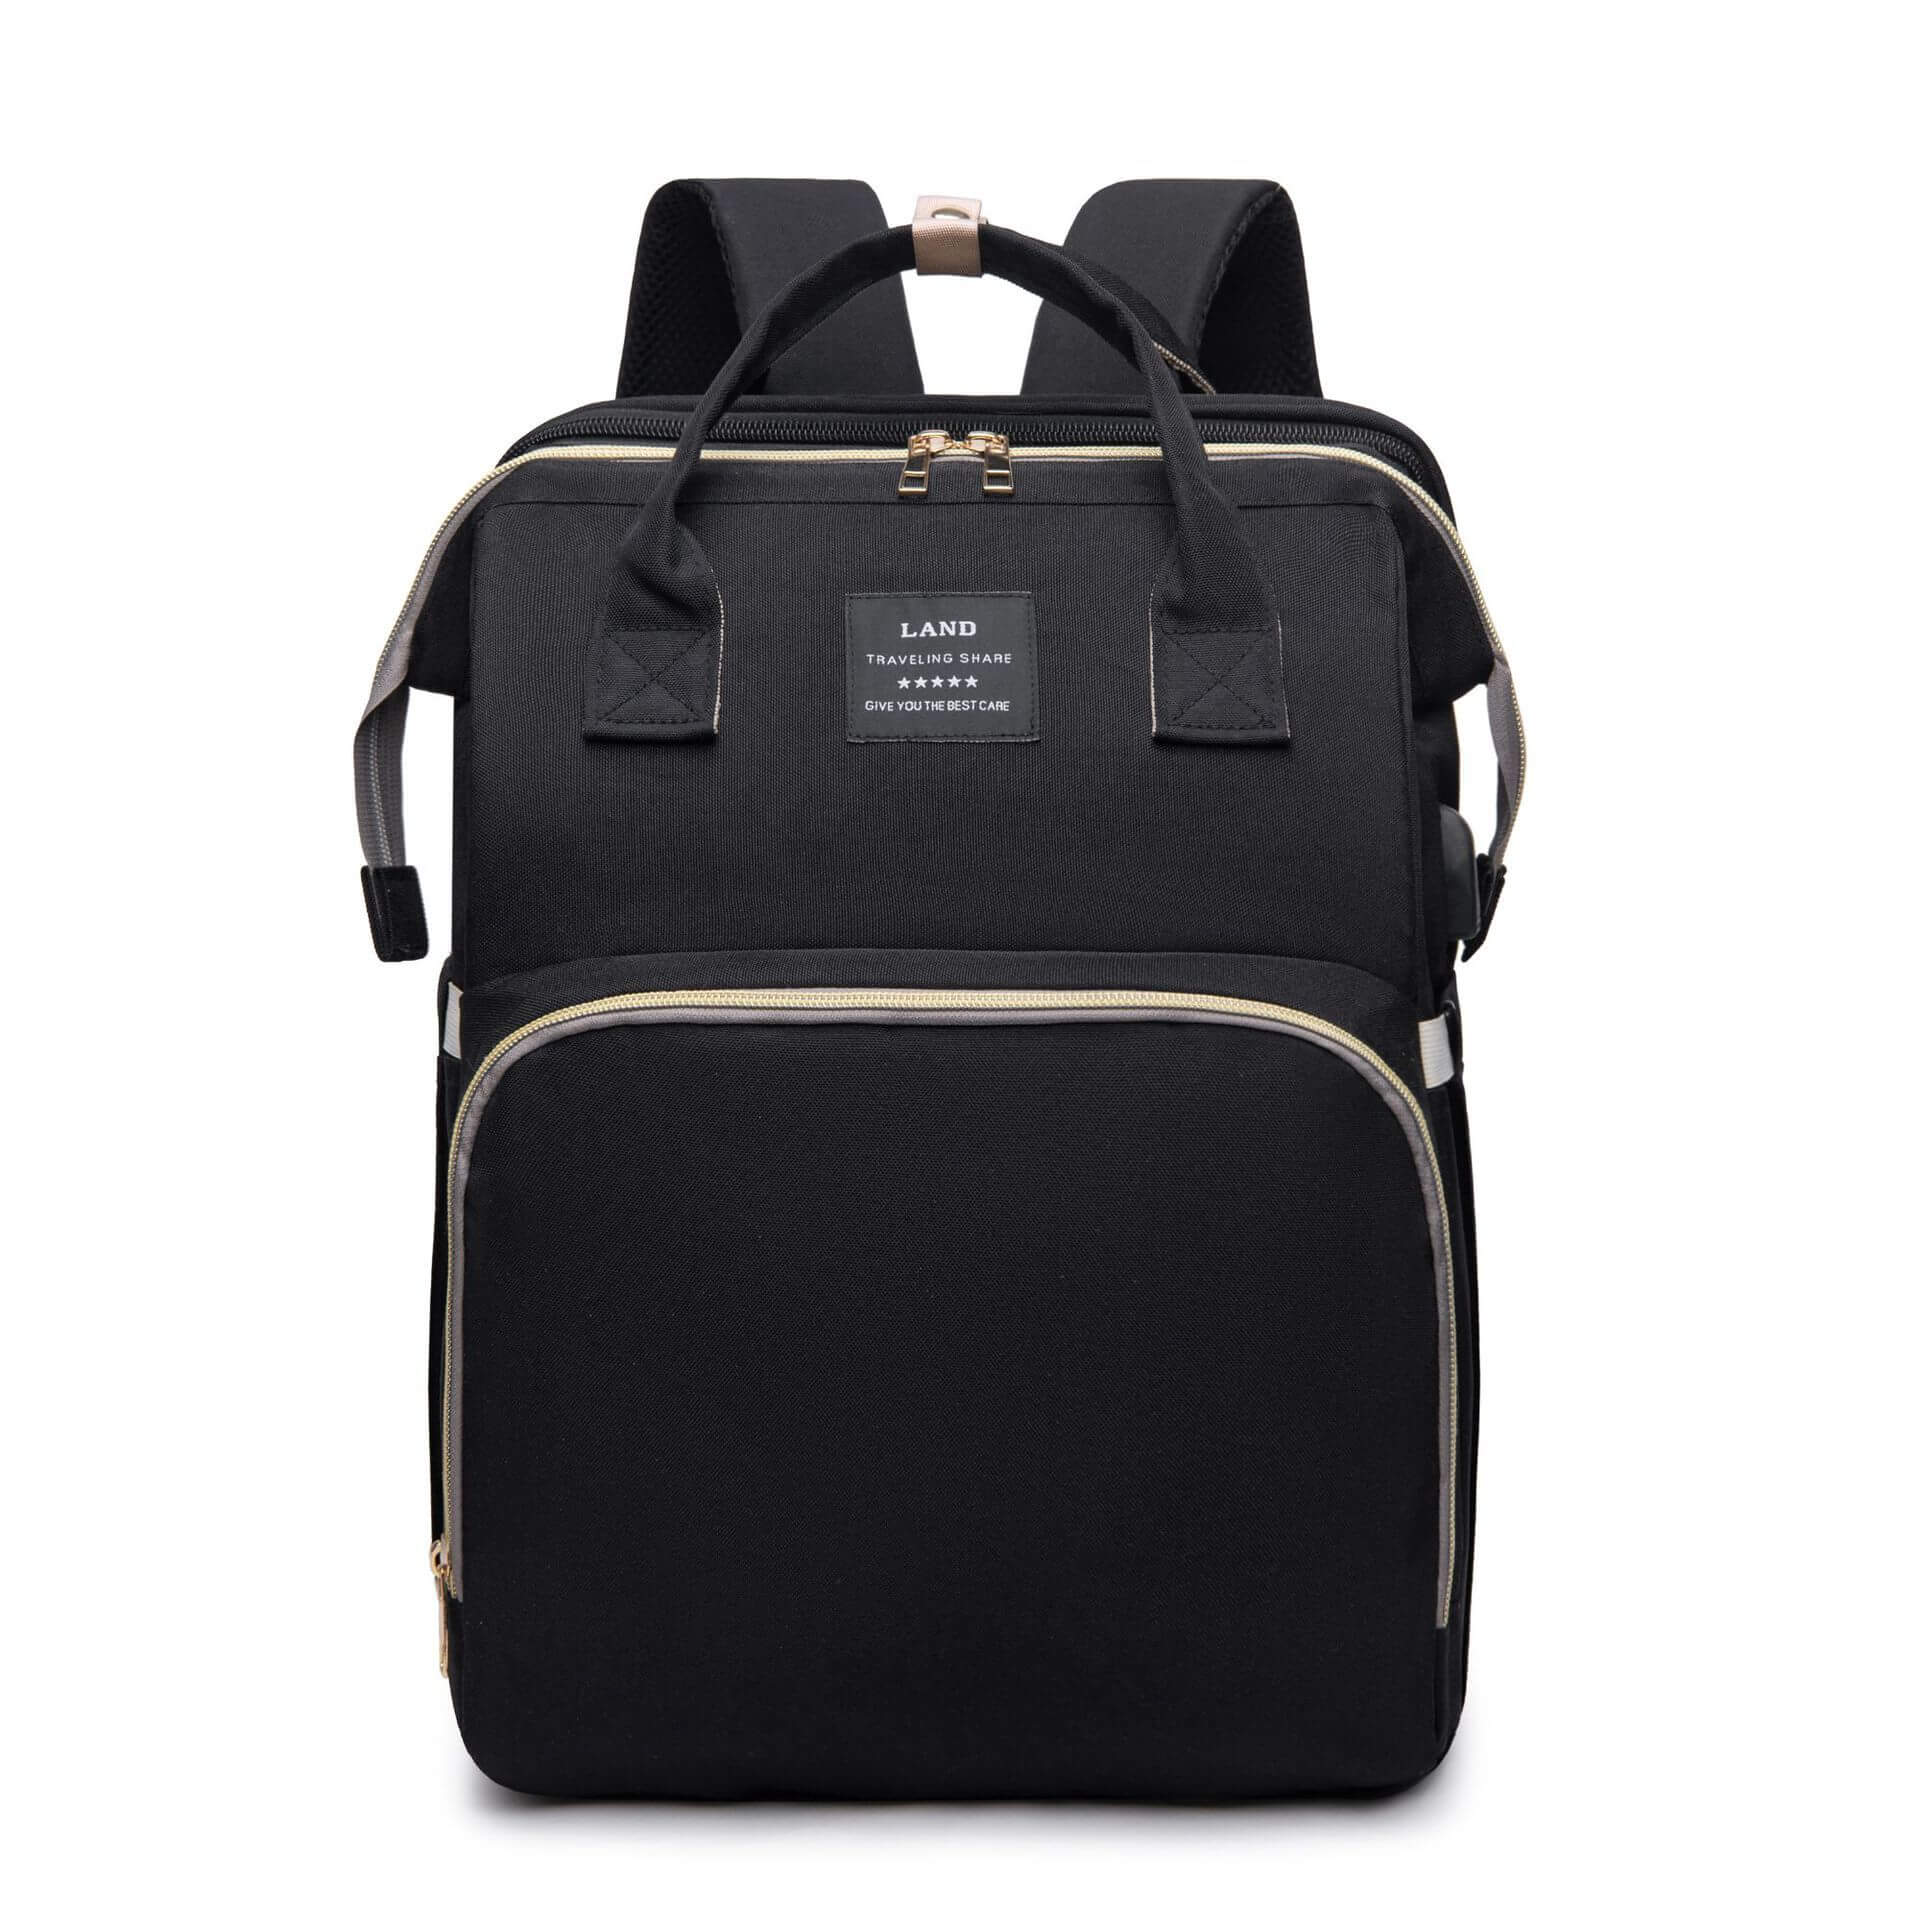 Crib backpack in color black